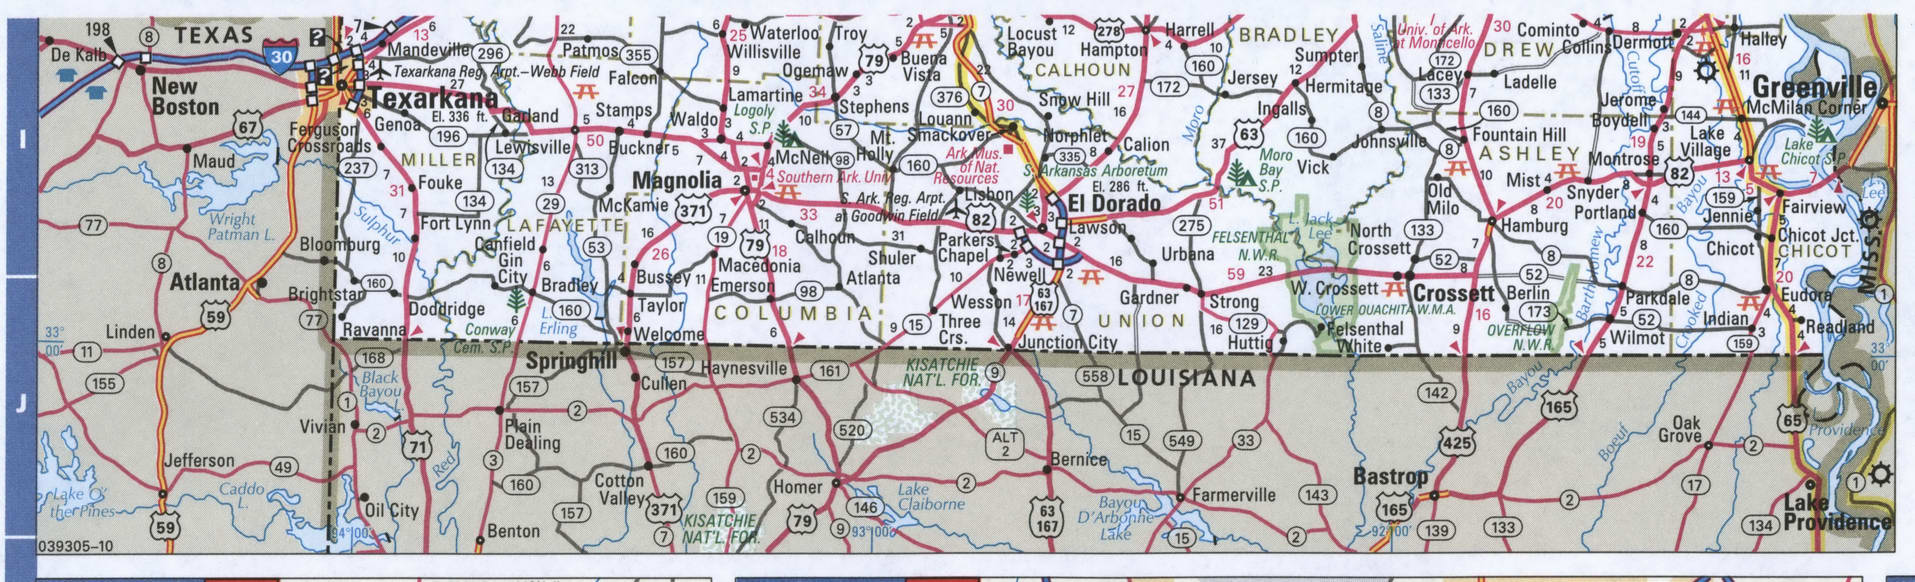 Arkansas Southern detailed roads map